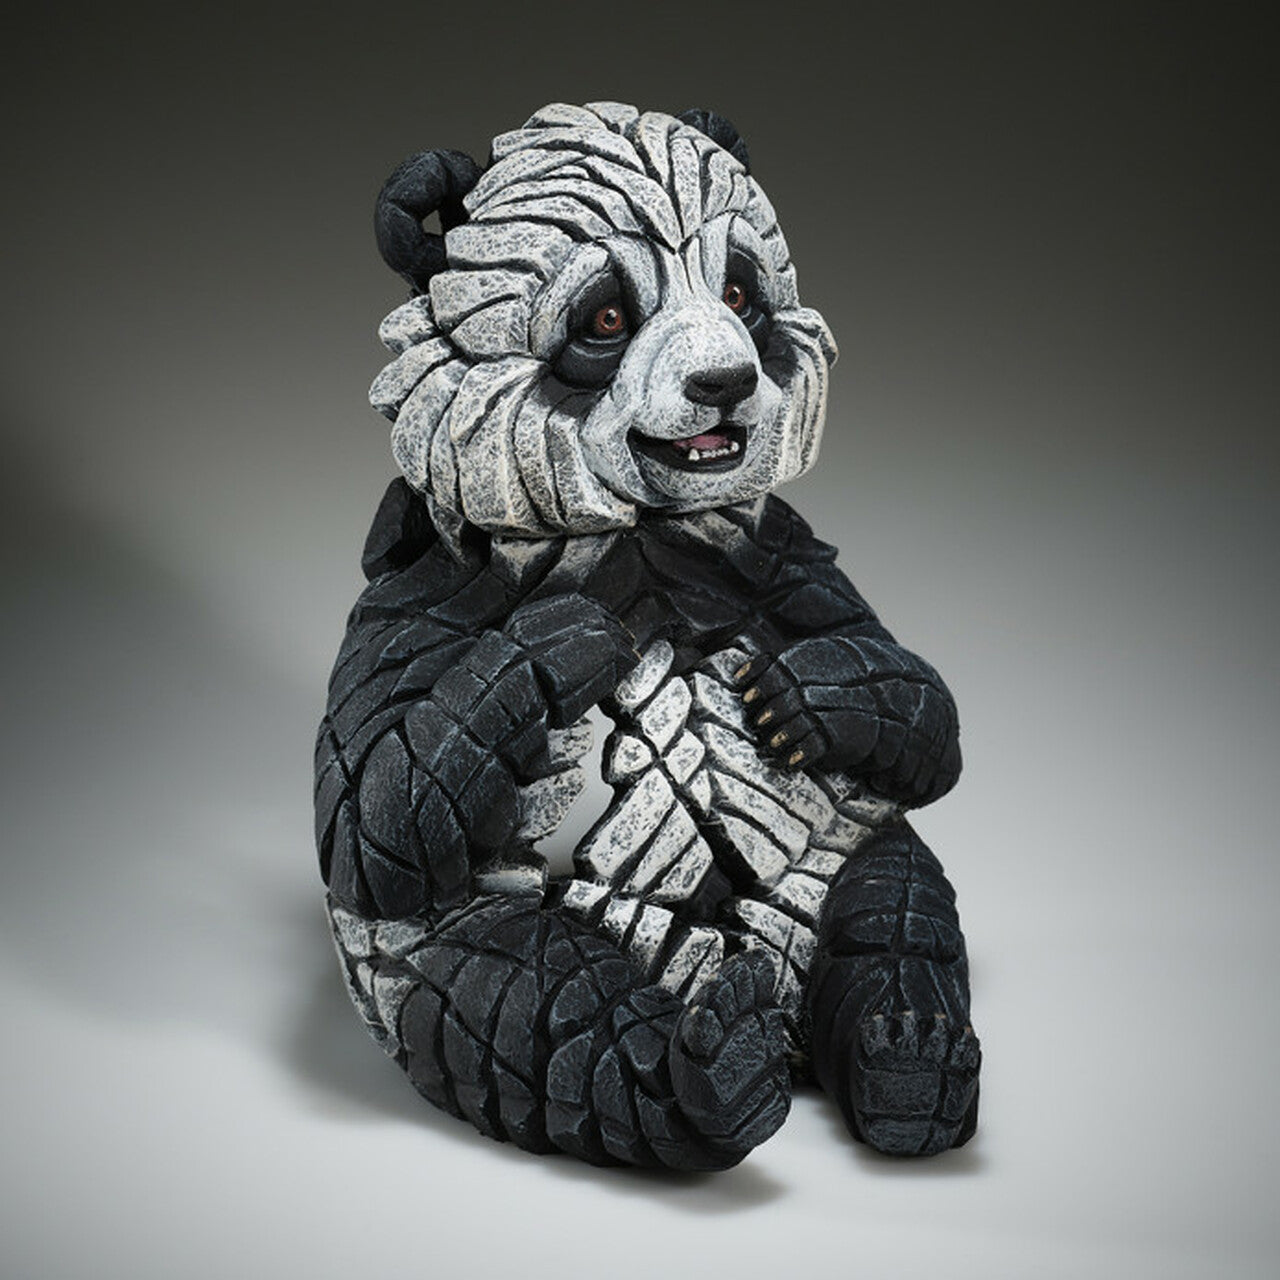 Panda Cub from Edge Sculpture by Matt Buckley – Artworx Gallery